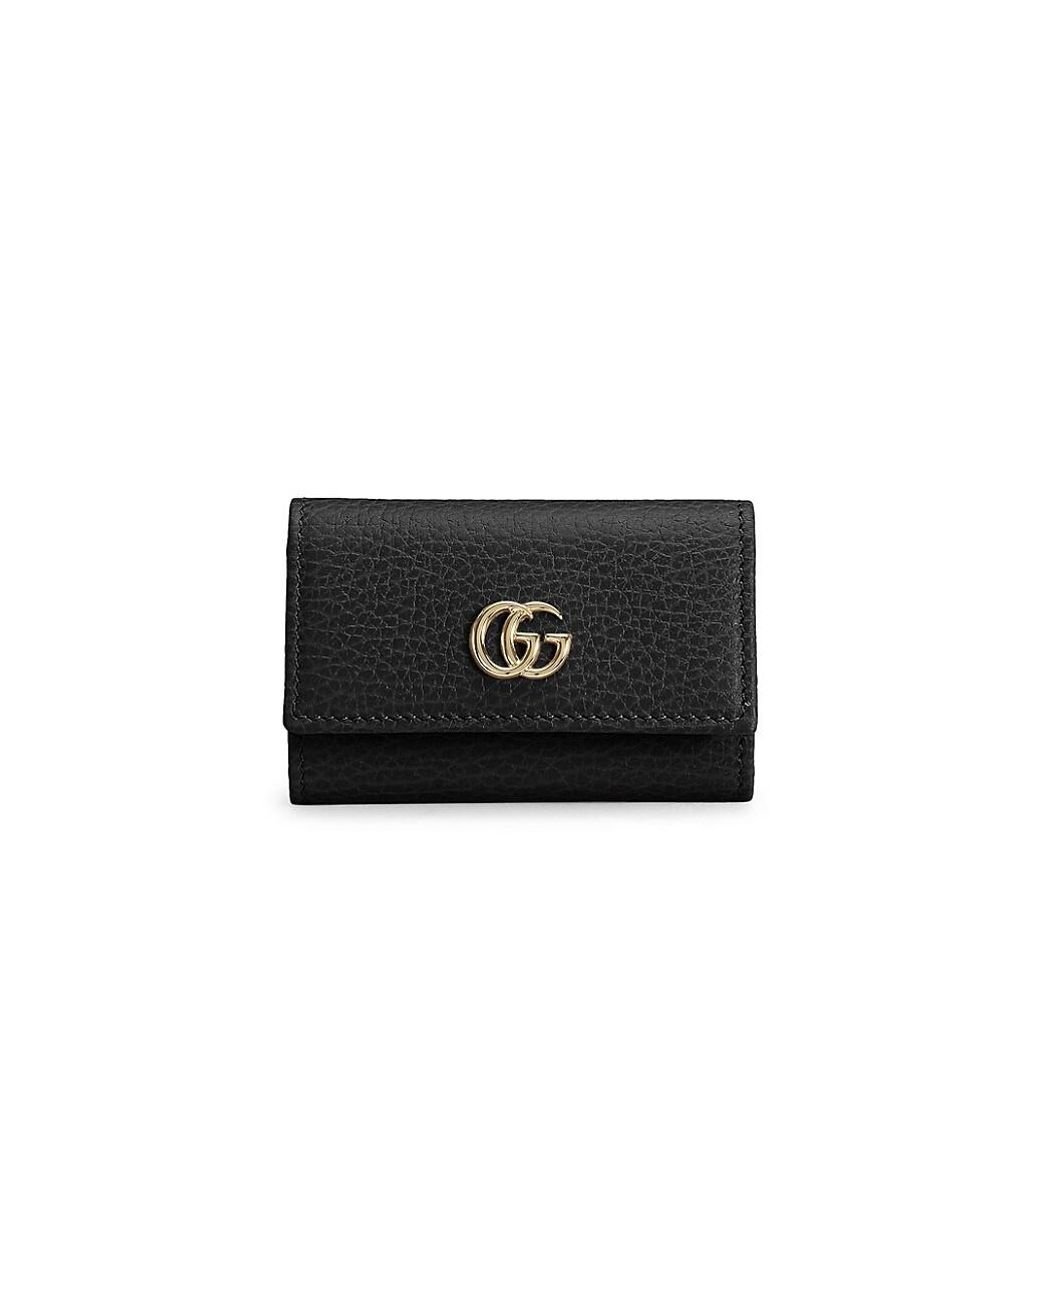 Gucci Black Matelasse Leather GG Marmont Key Case Gucci